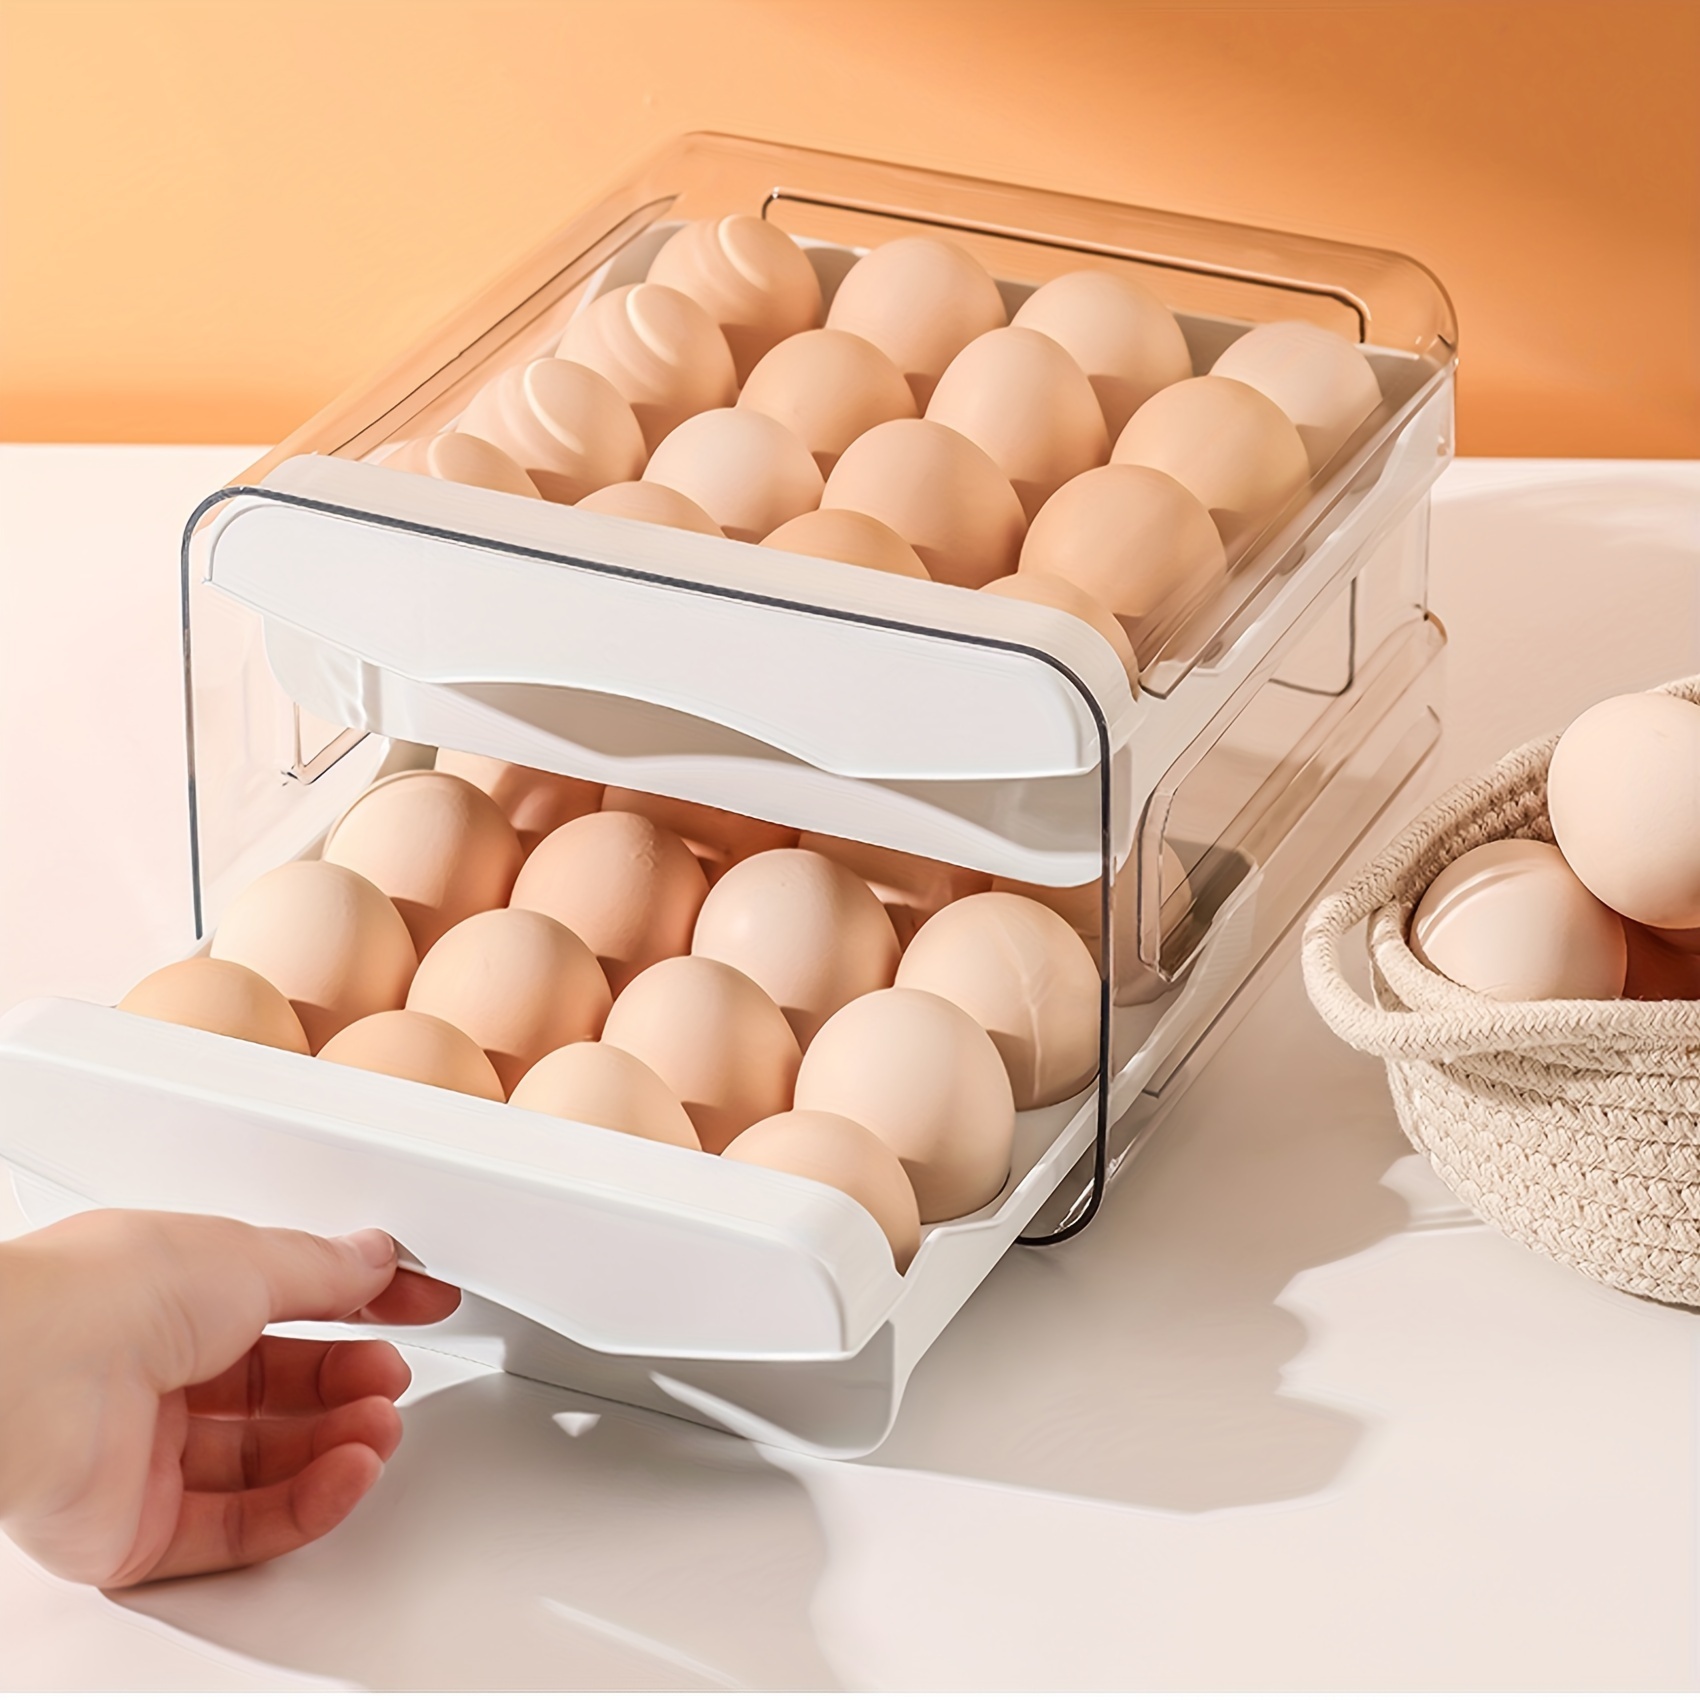 Egg Holder Countertop Egg Storage Egg Baskets For Fresh Eggs Vintage  Refrigerator Storage Bins Home Storage And Organization - AliExpress